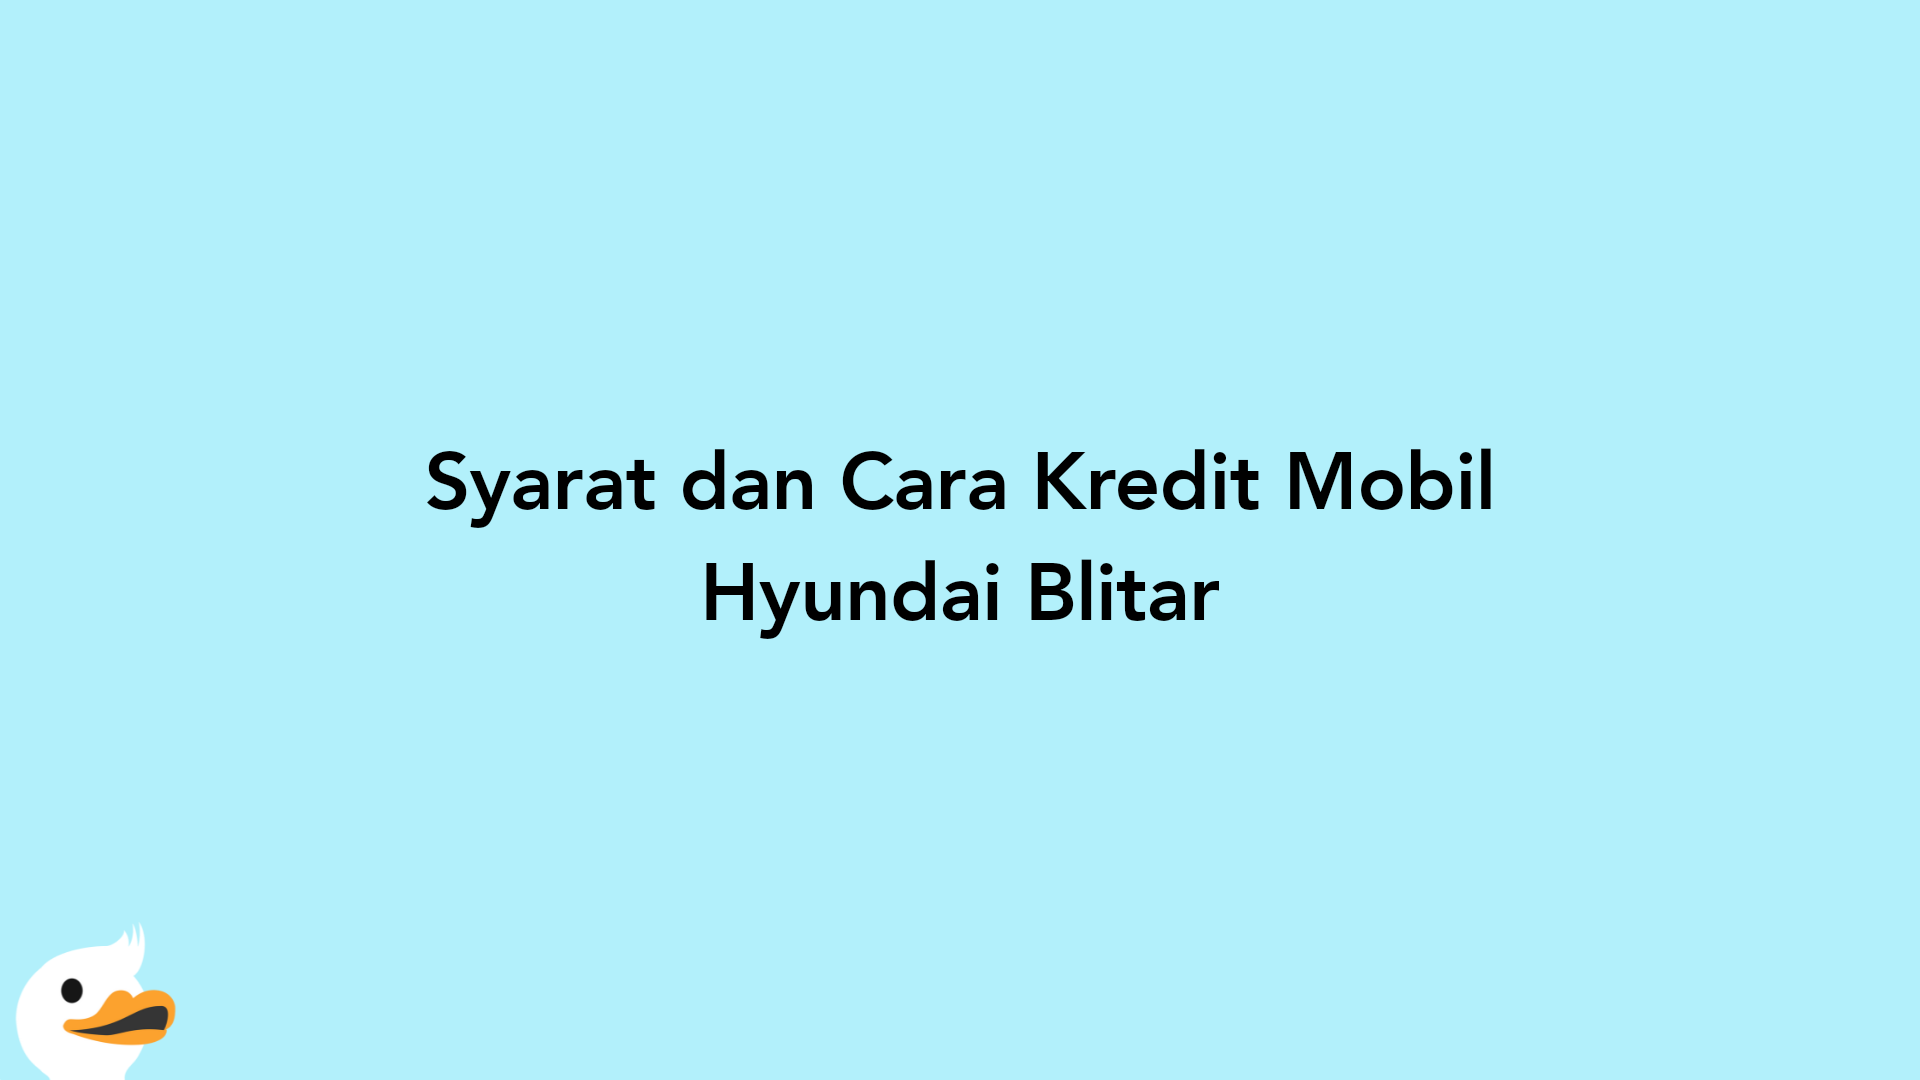 Syarat dan Cara Kredit Mobil Hyundai Blitar